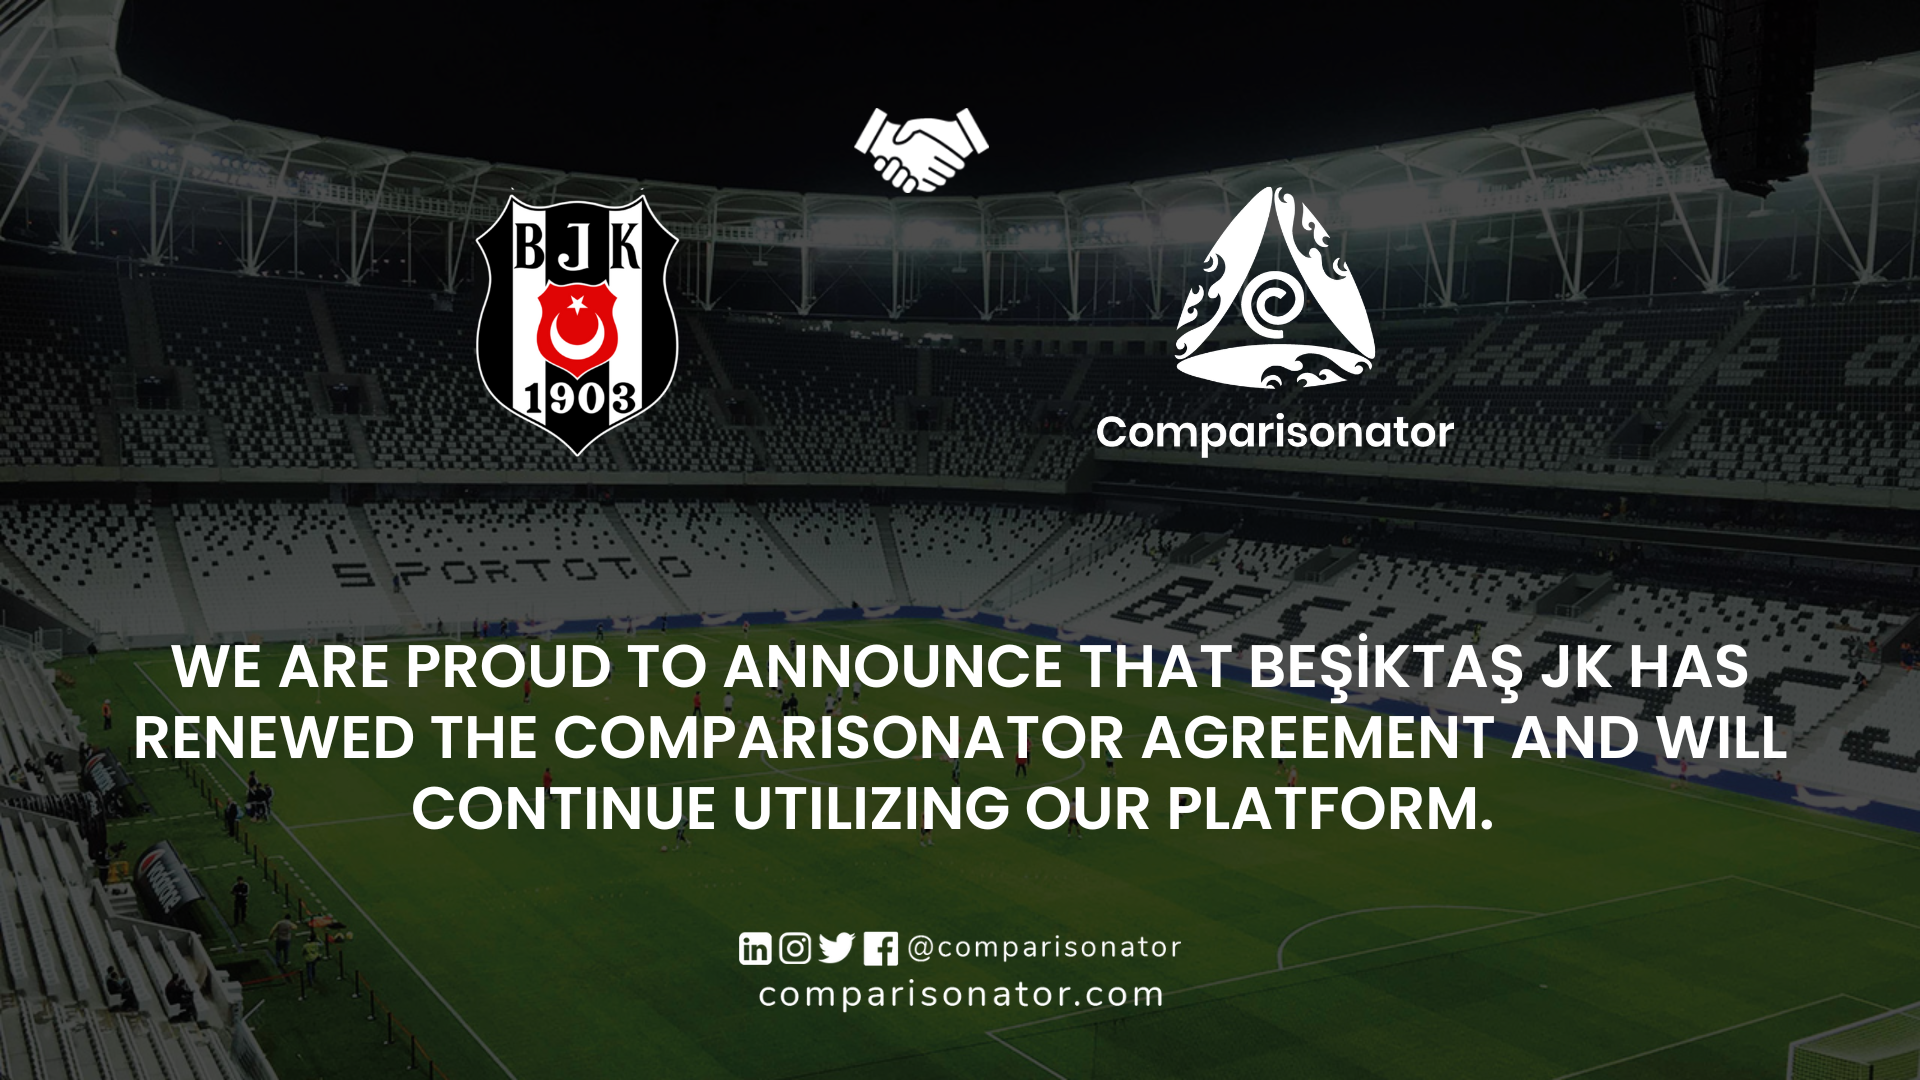 Comparisonator - Comparisonator Welcomes Beşiktaş JK